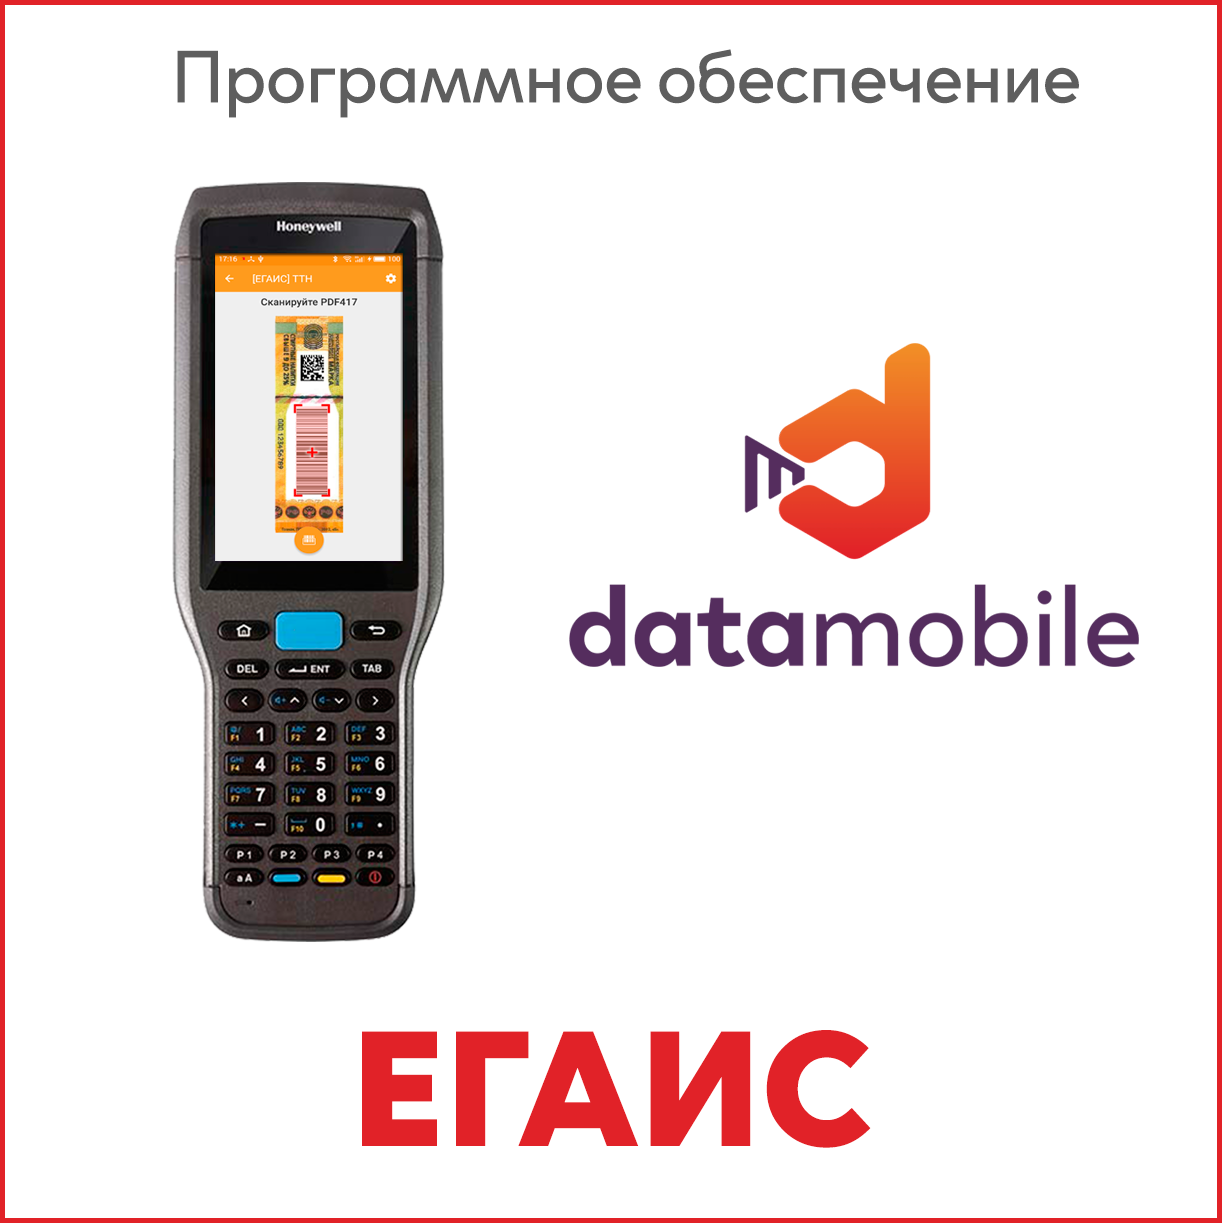 Сканпорт ПО DataMobile, версия Online Lite ЕГАИС (Windows/Android) Арт.